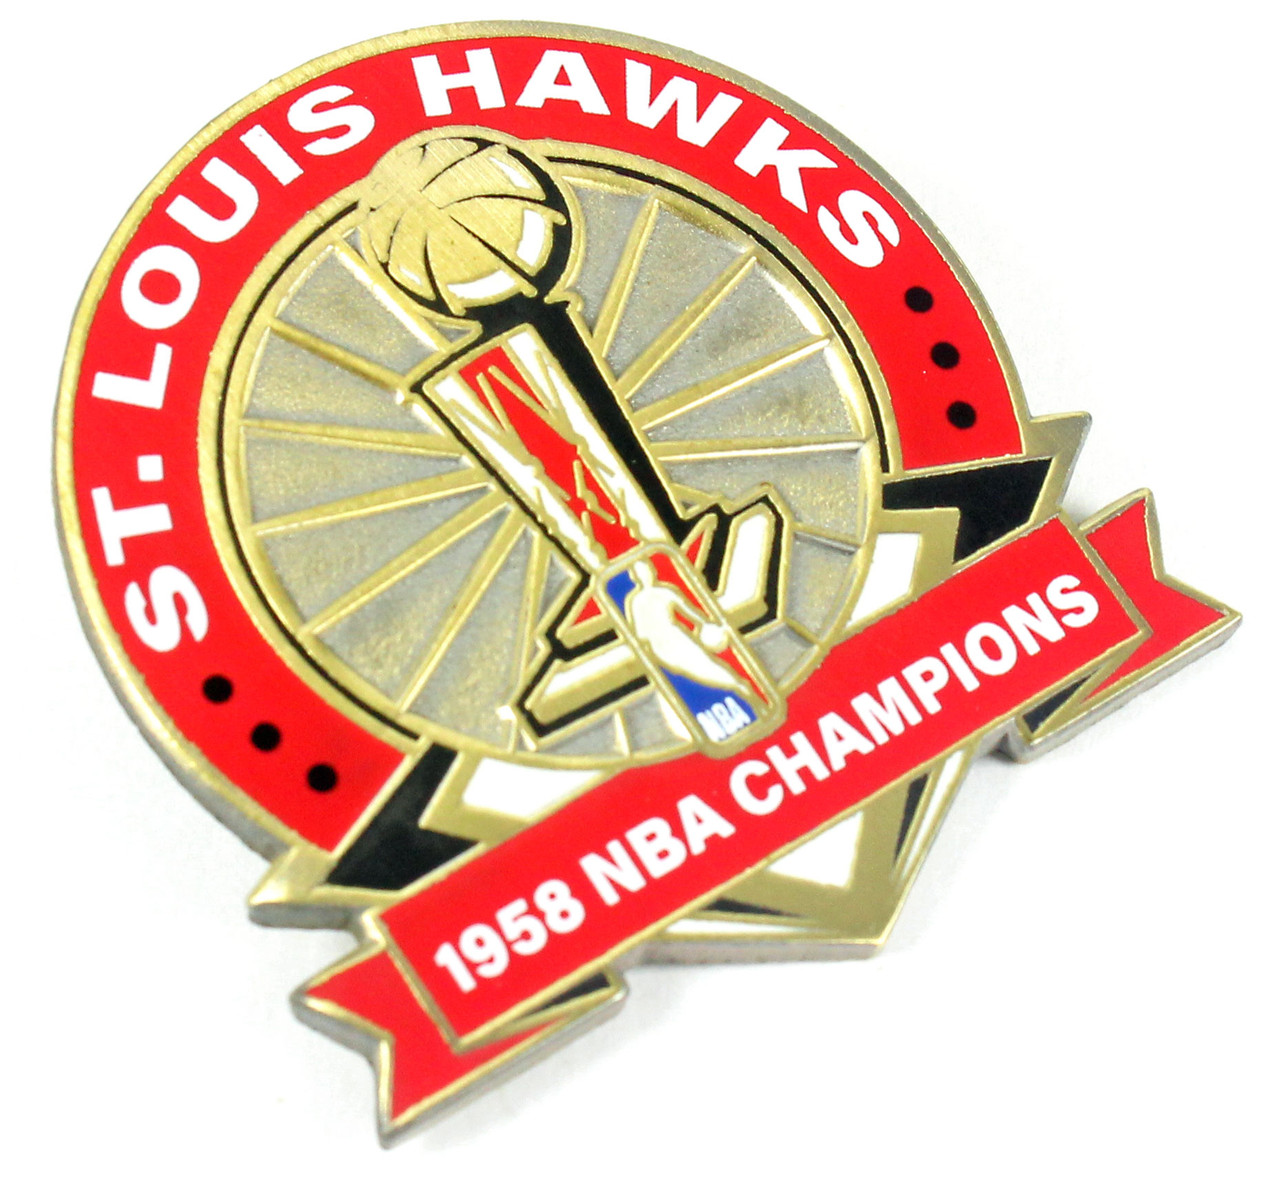 St Louis Hawks NBA Champs Metal Print